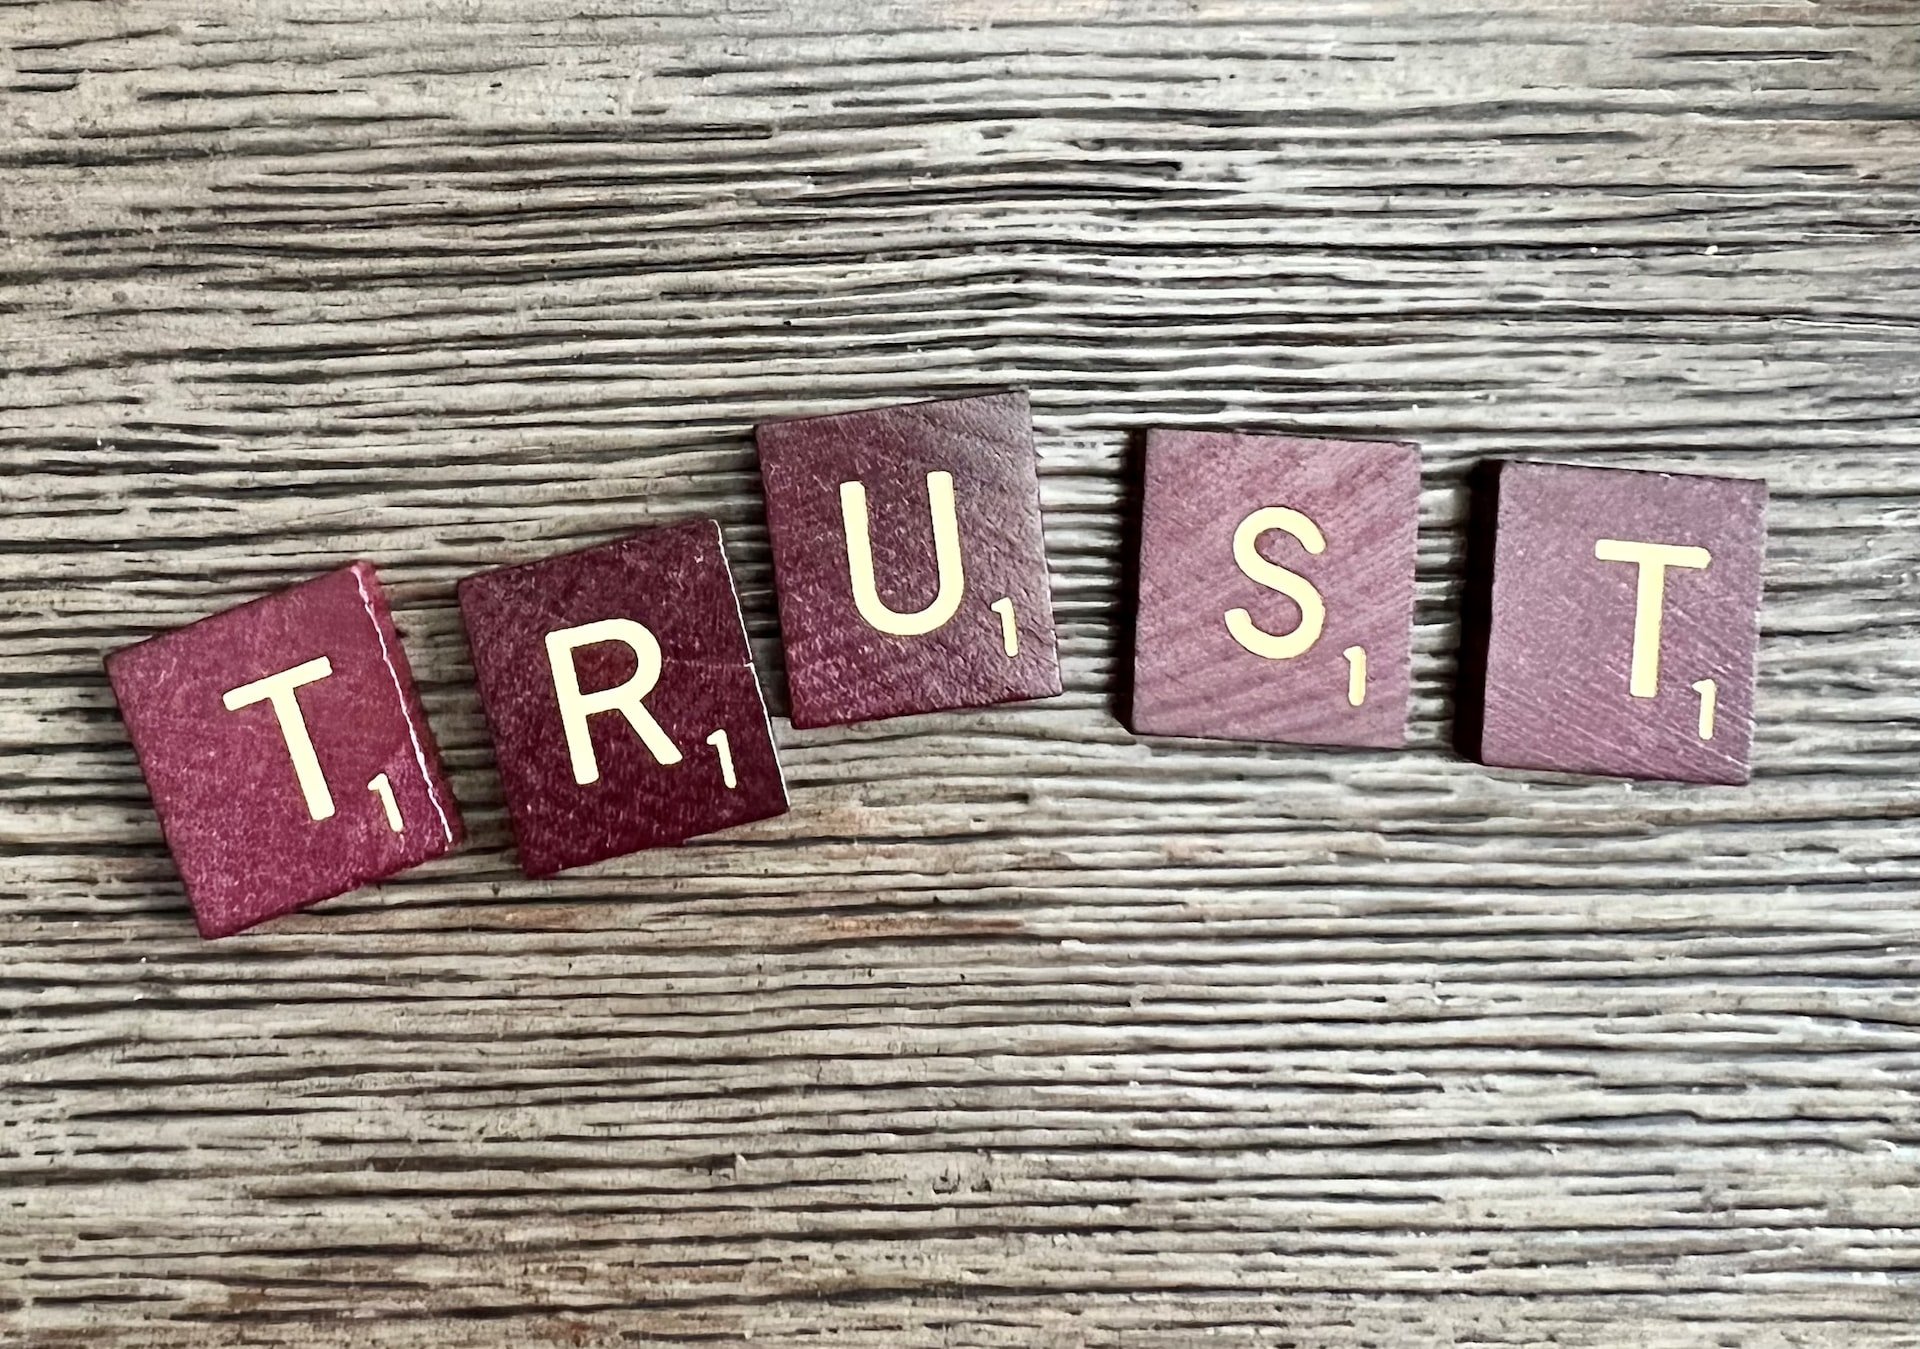 Scrabble tiles spelling 'trust'